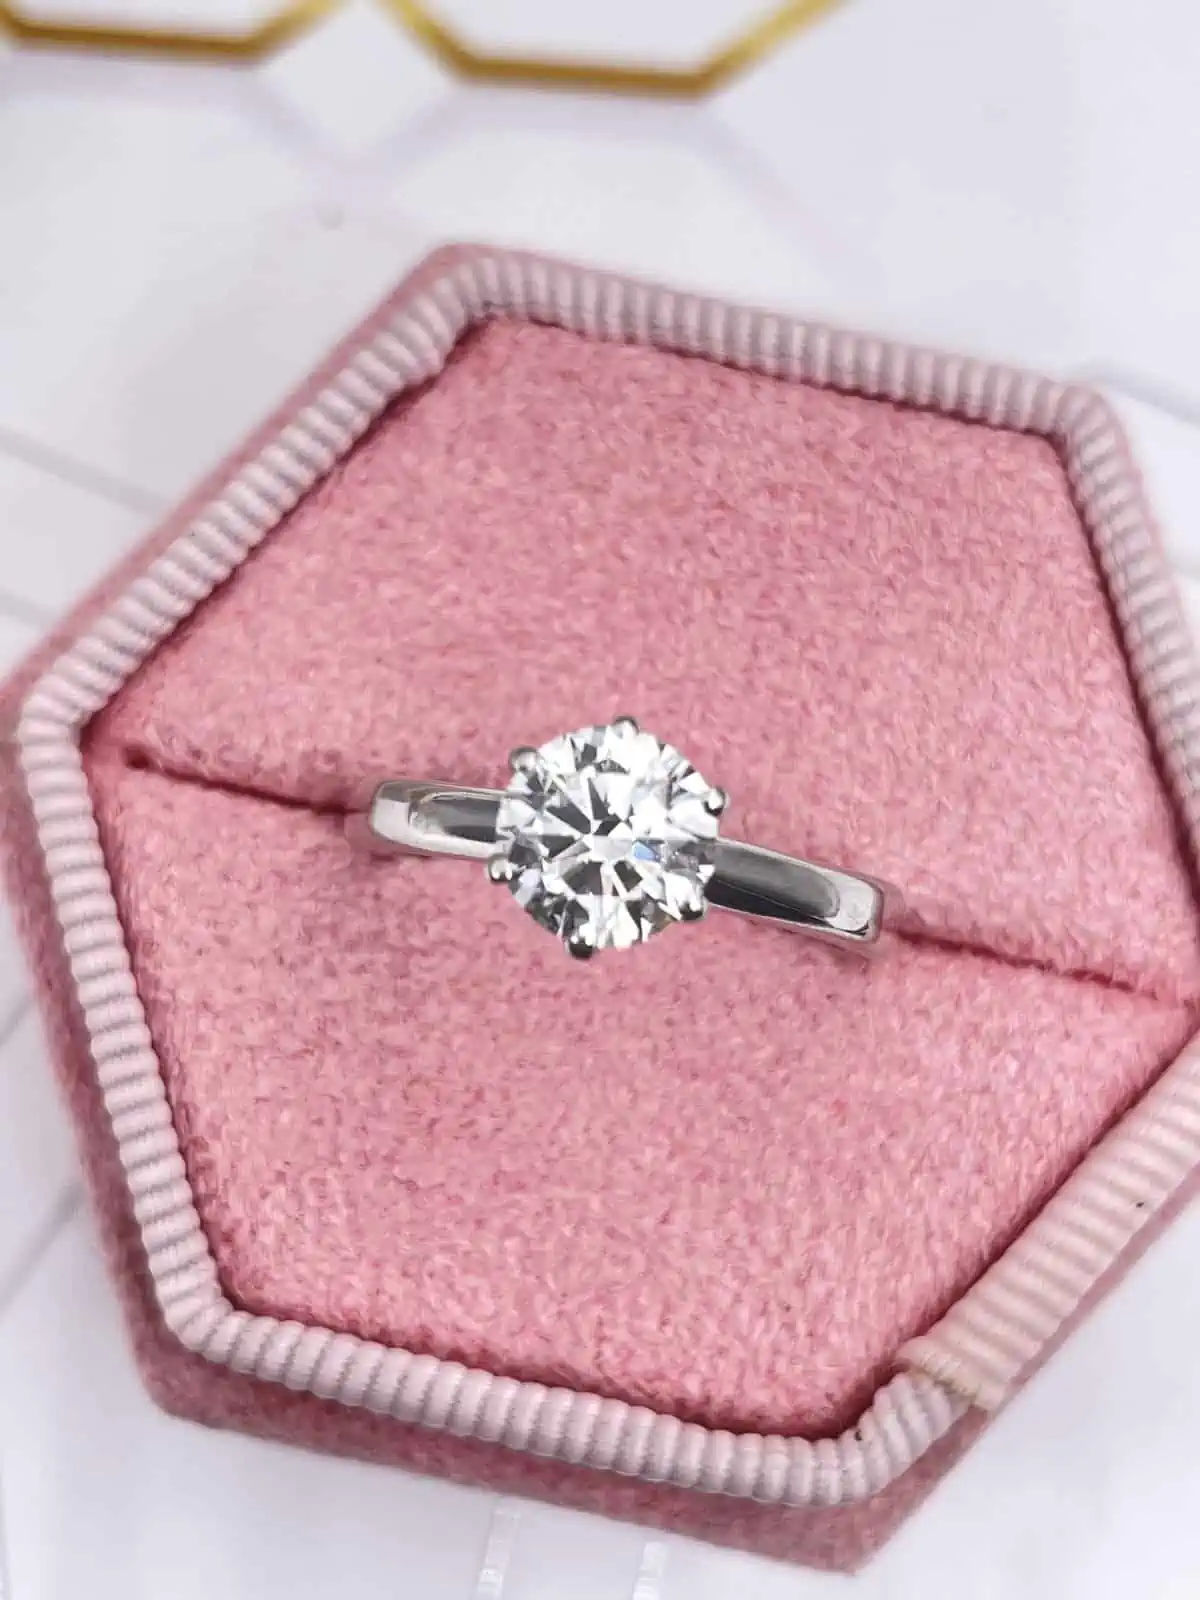 Six prong diamond ring